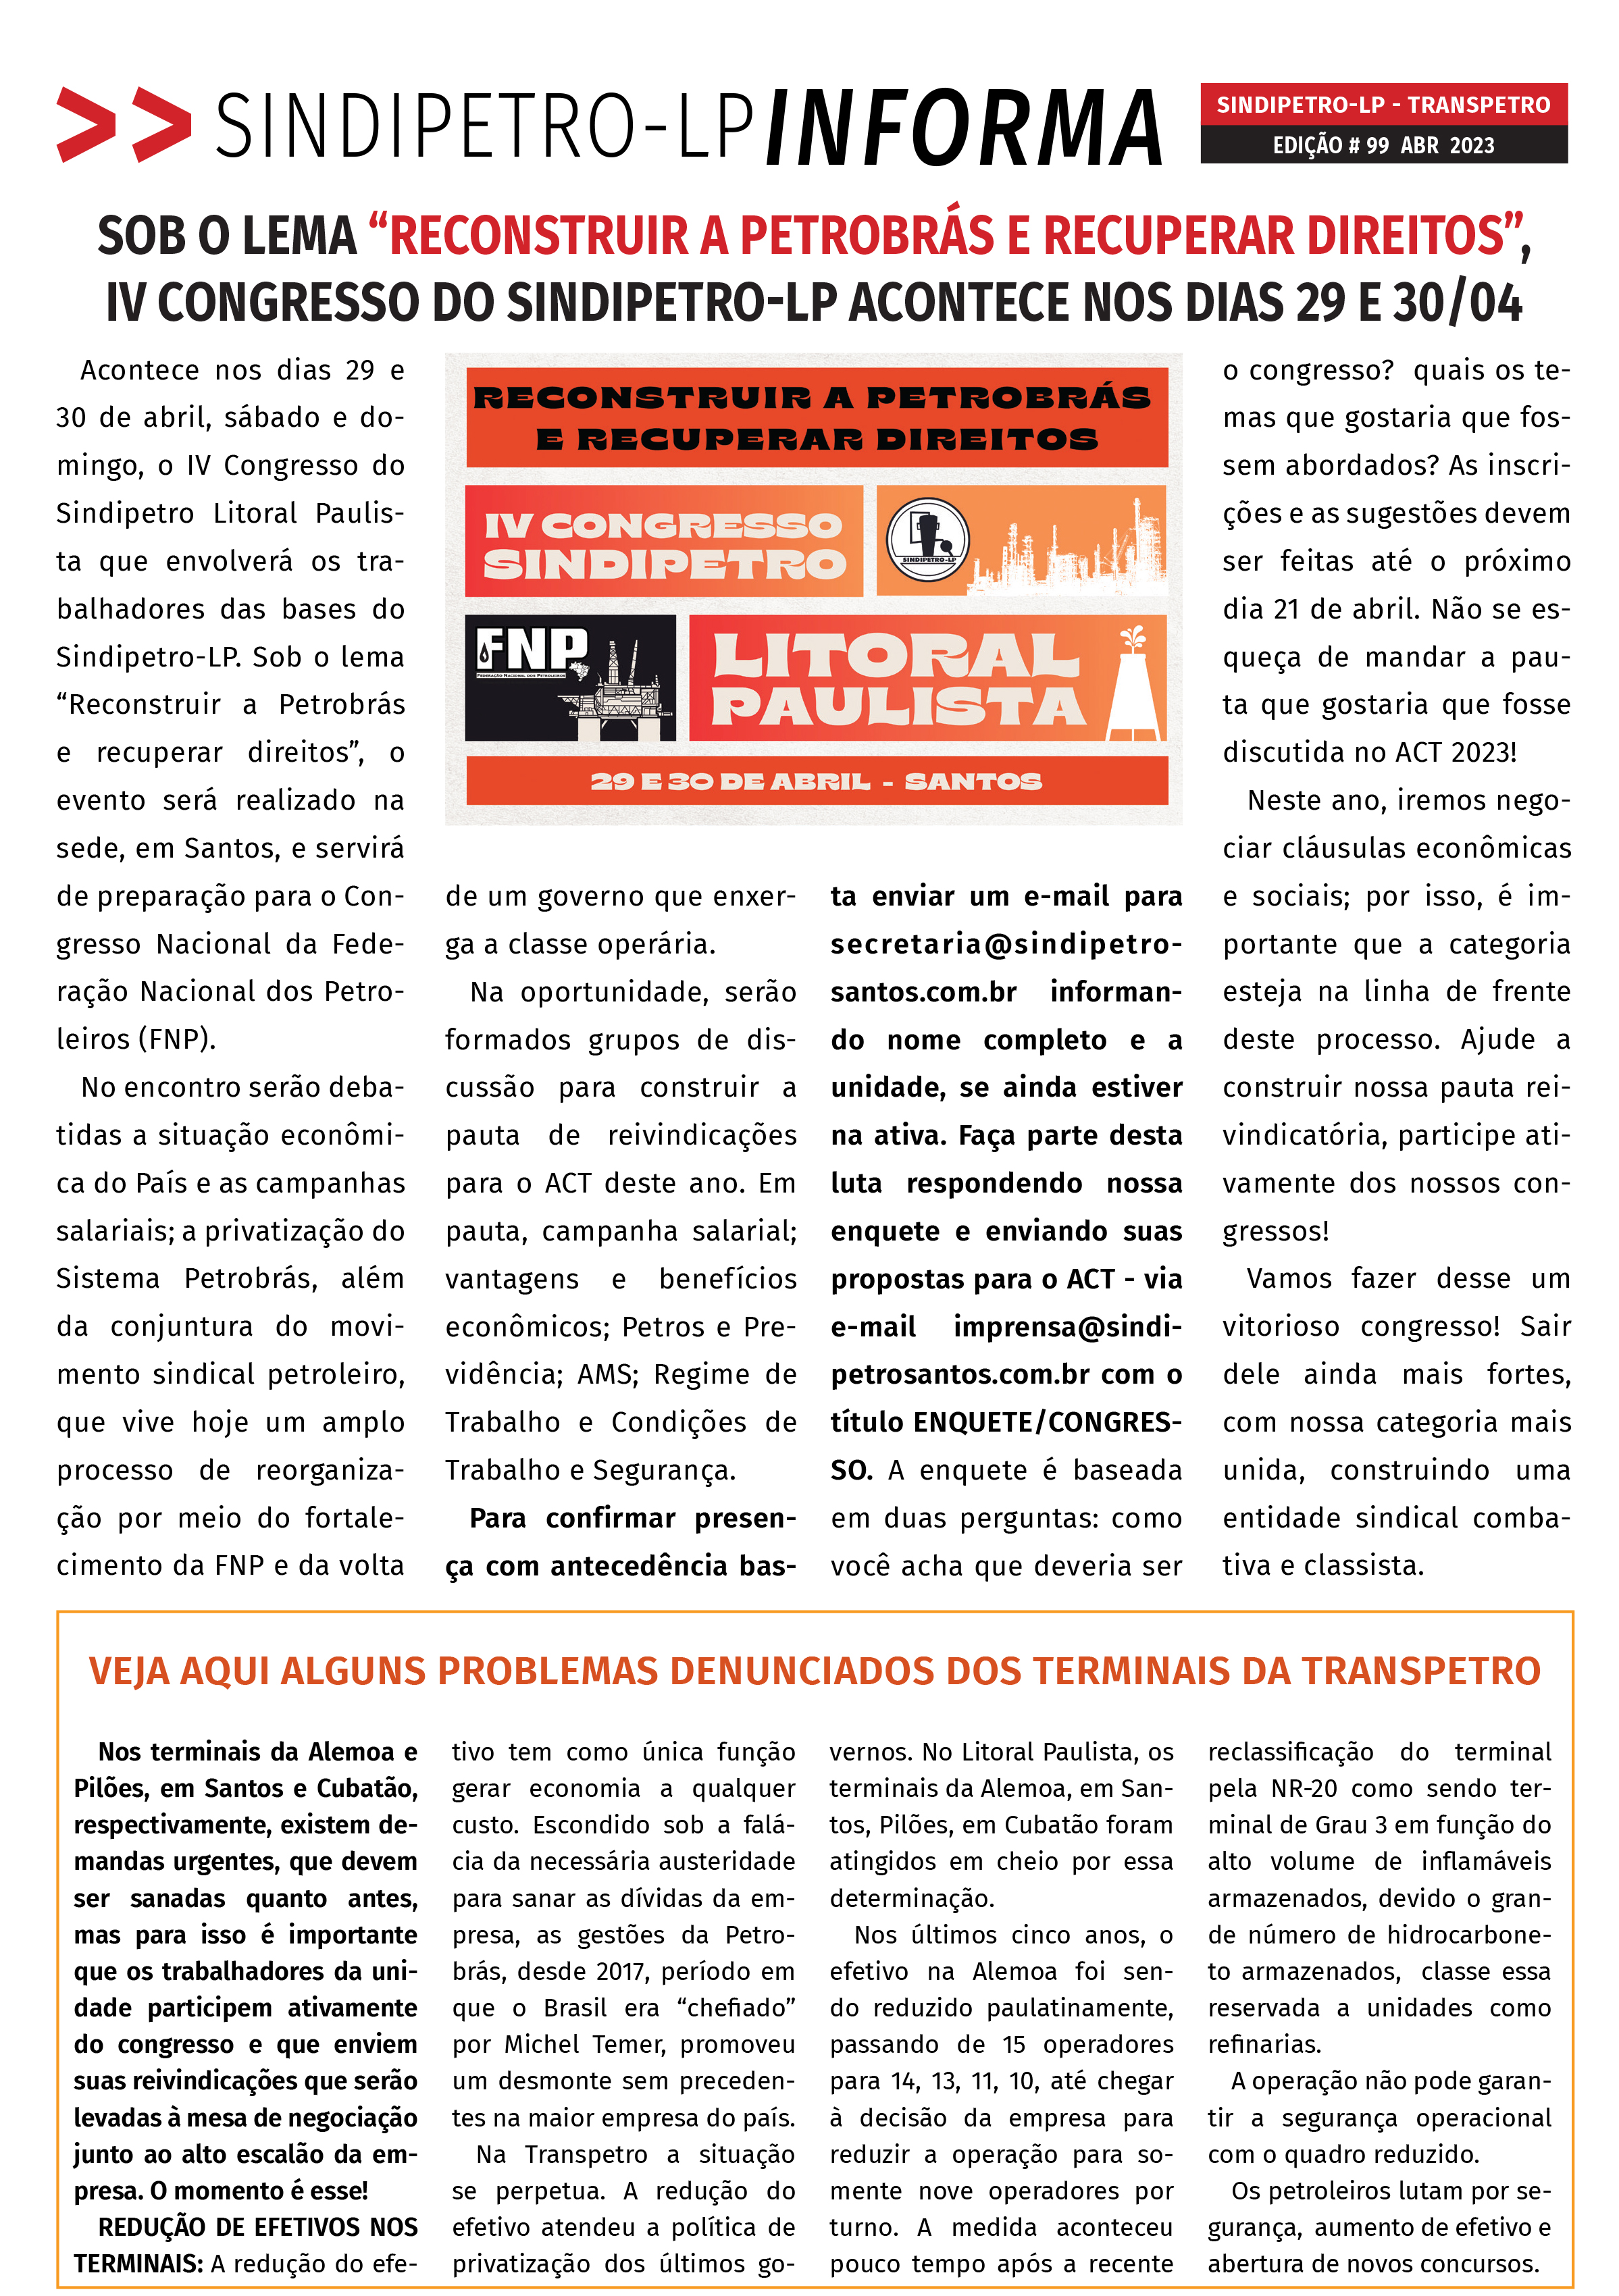 Boletim Sindipetro Informa n° 99 - Alemoa